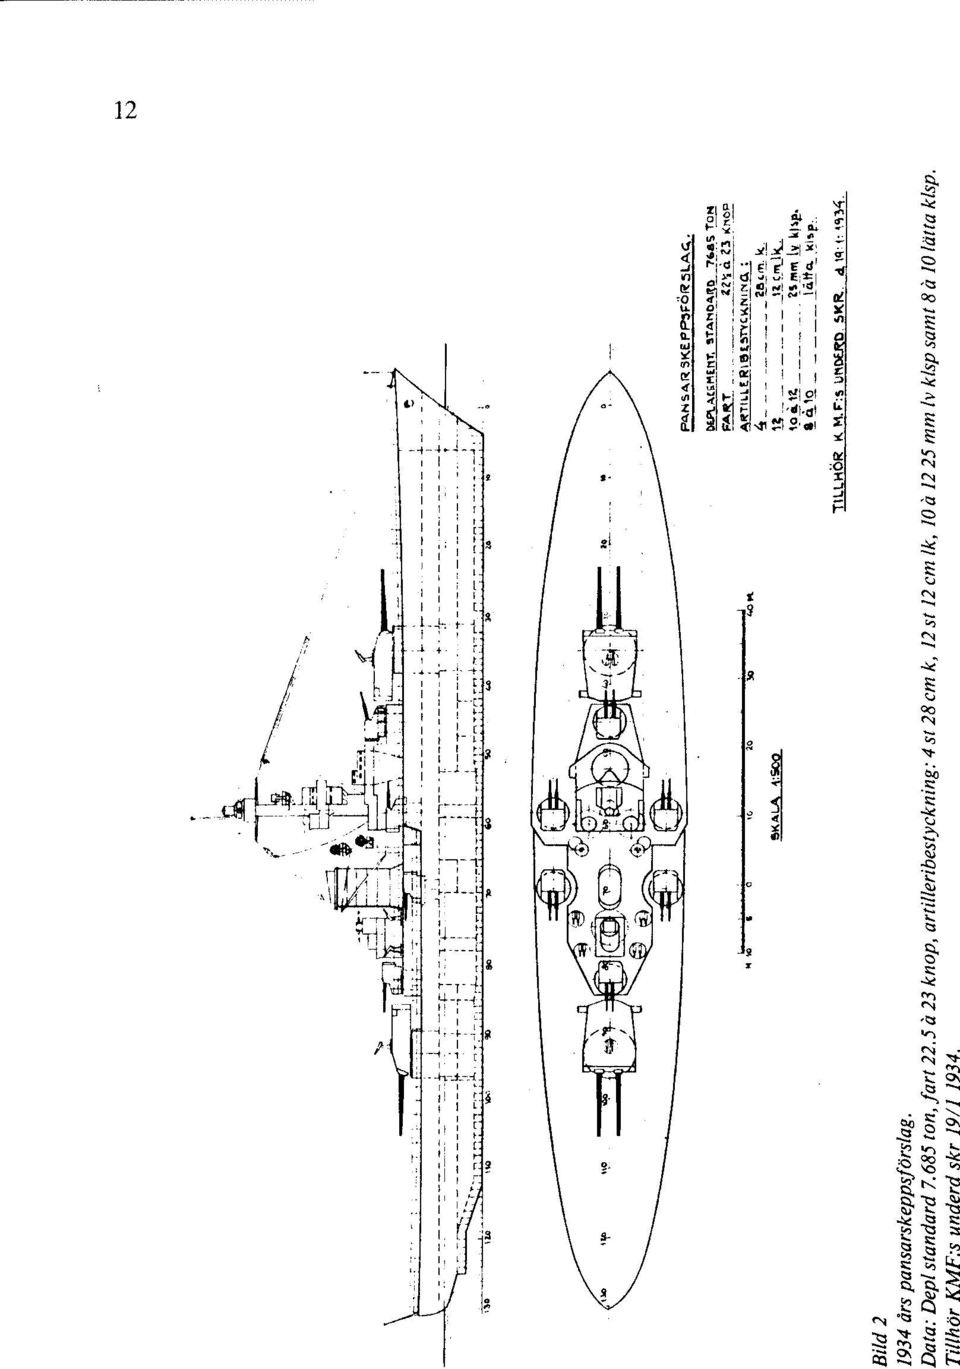 Bild 2 1934 års pansarskepps/örslag. Data: Depl standard 7.685 ton, fart 22.